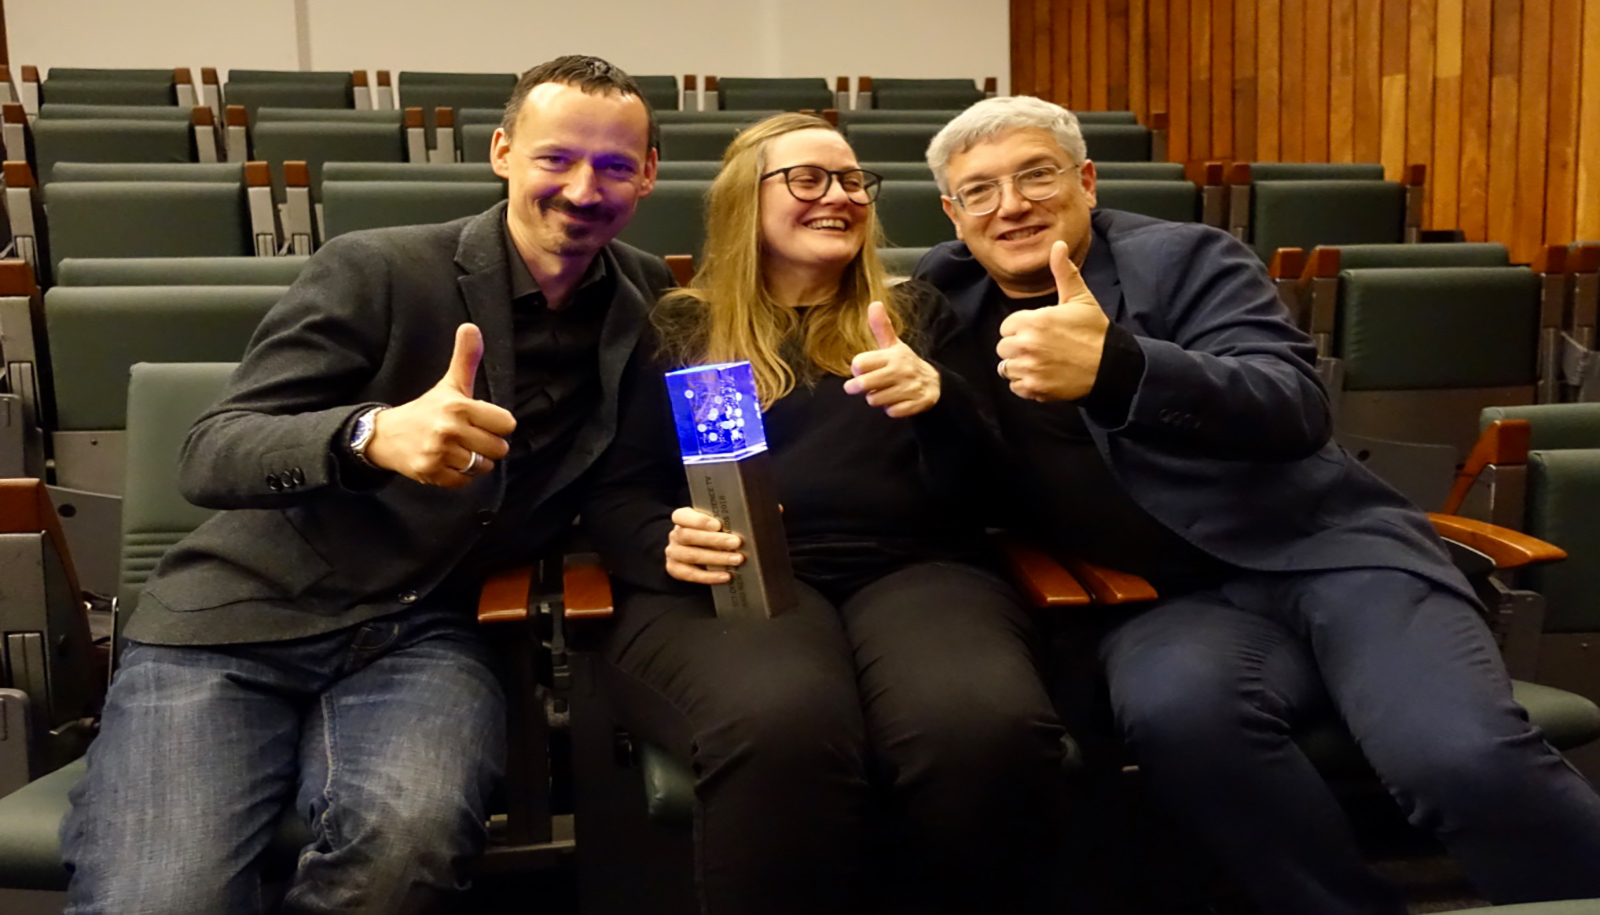 Unsere Soko Leipzig-Vertreter mit dem European Science TV and New Media Award